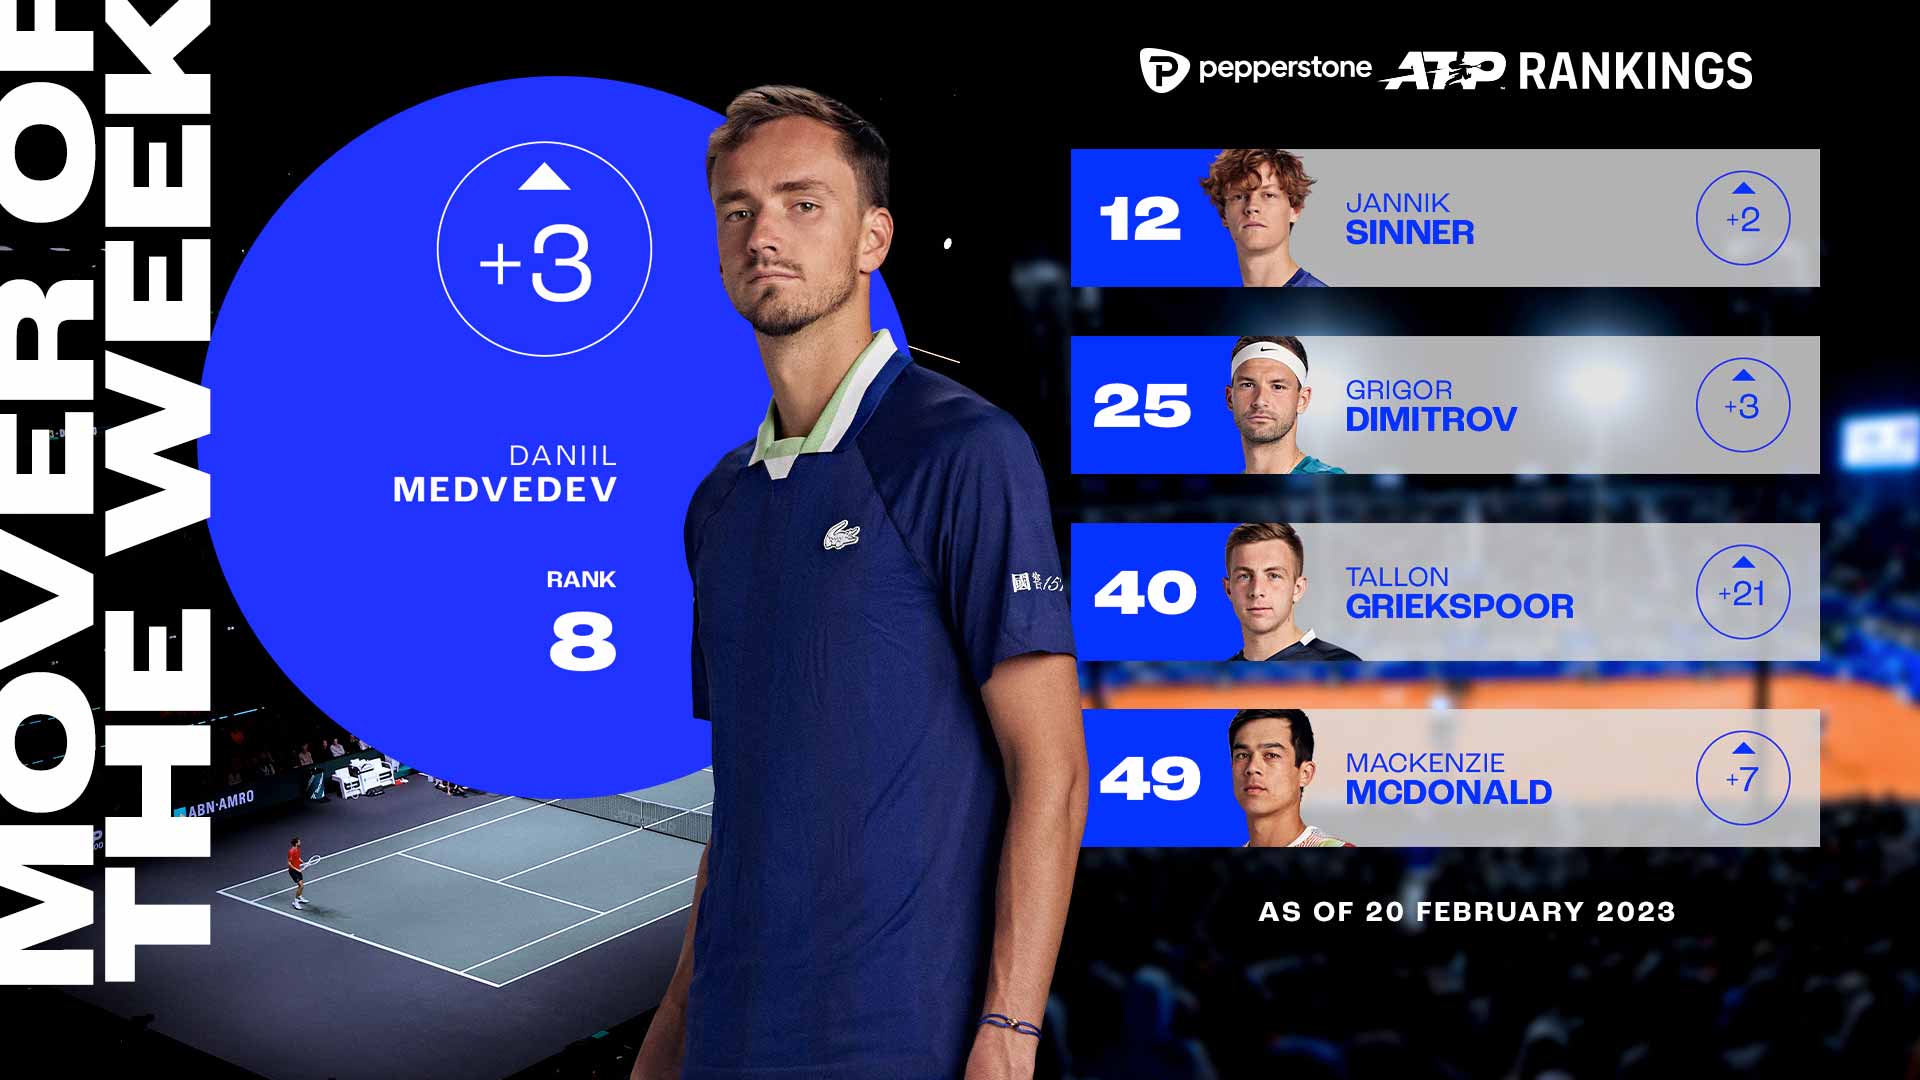 ATP & WTA Live Tennis Rankings - MatchStat